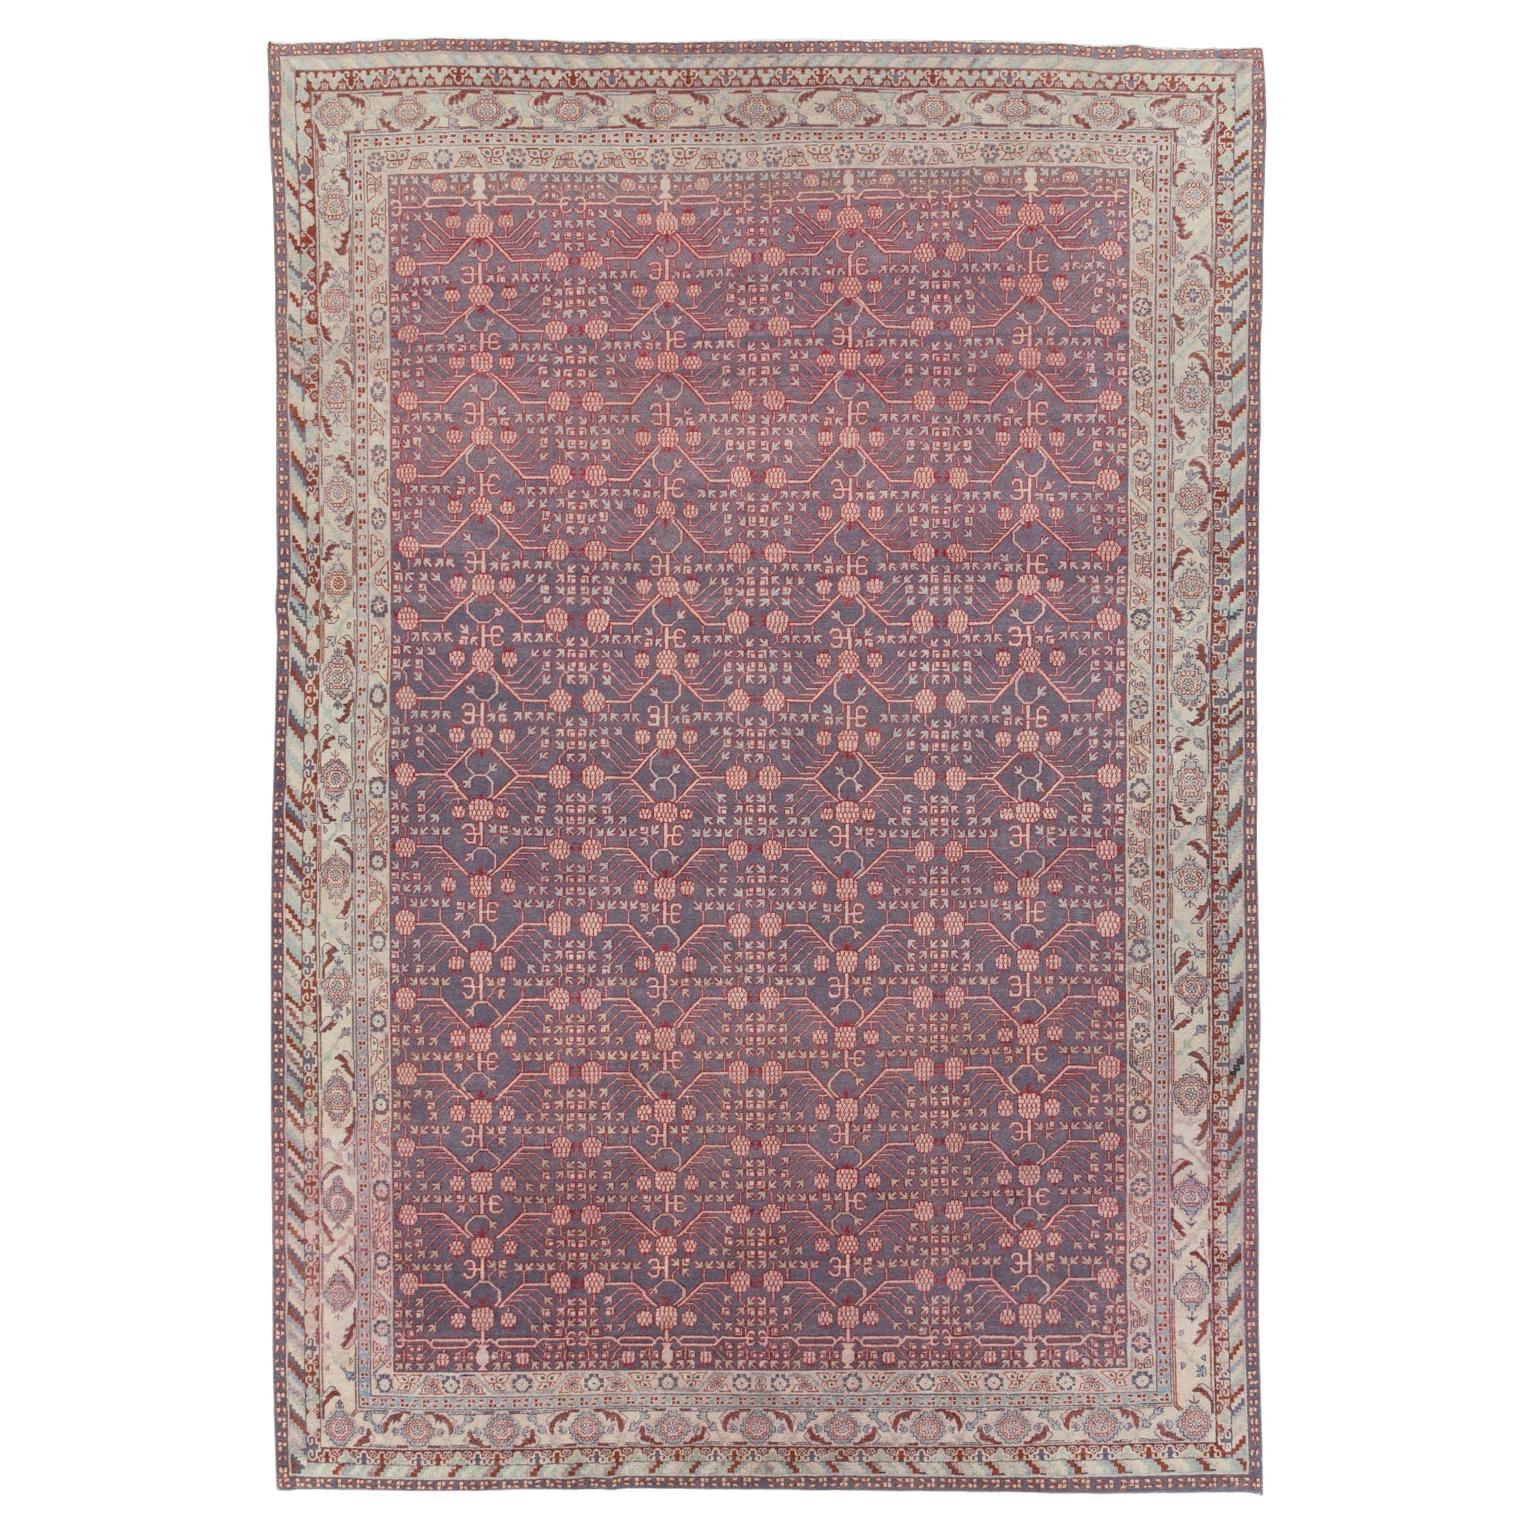 Early 20th Century Handmade East Turkestan Khotan Room Size Carpet For Sale